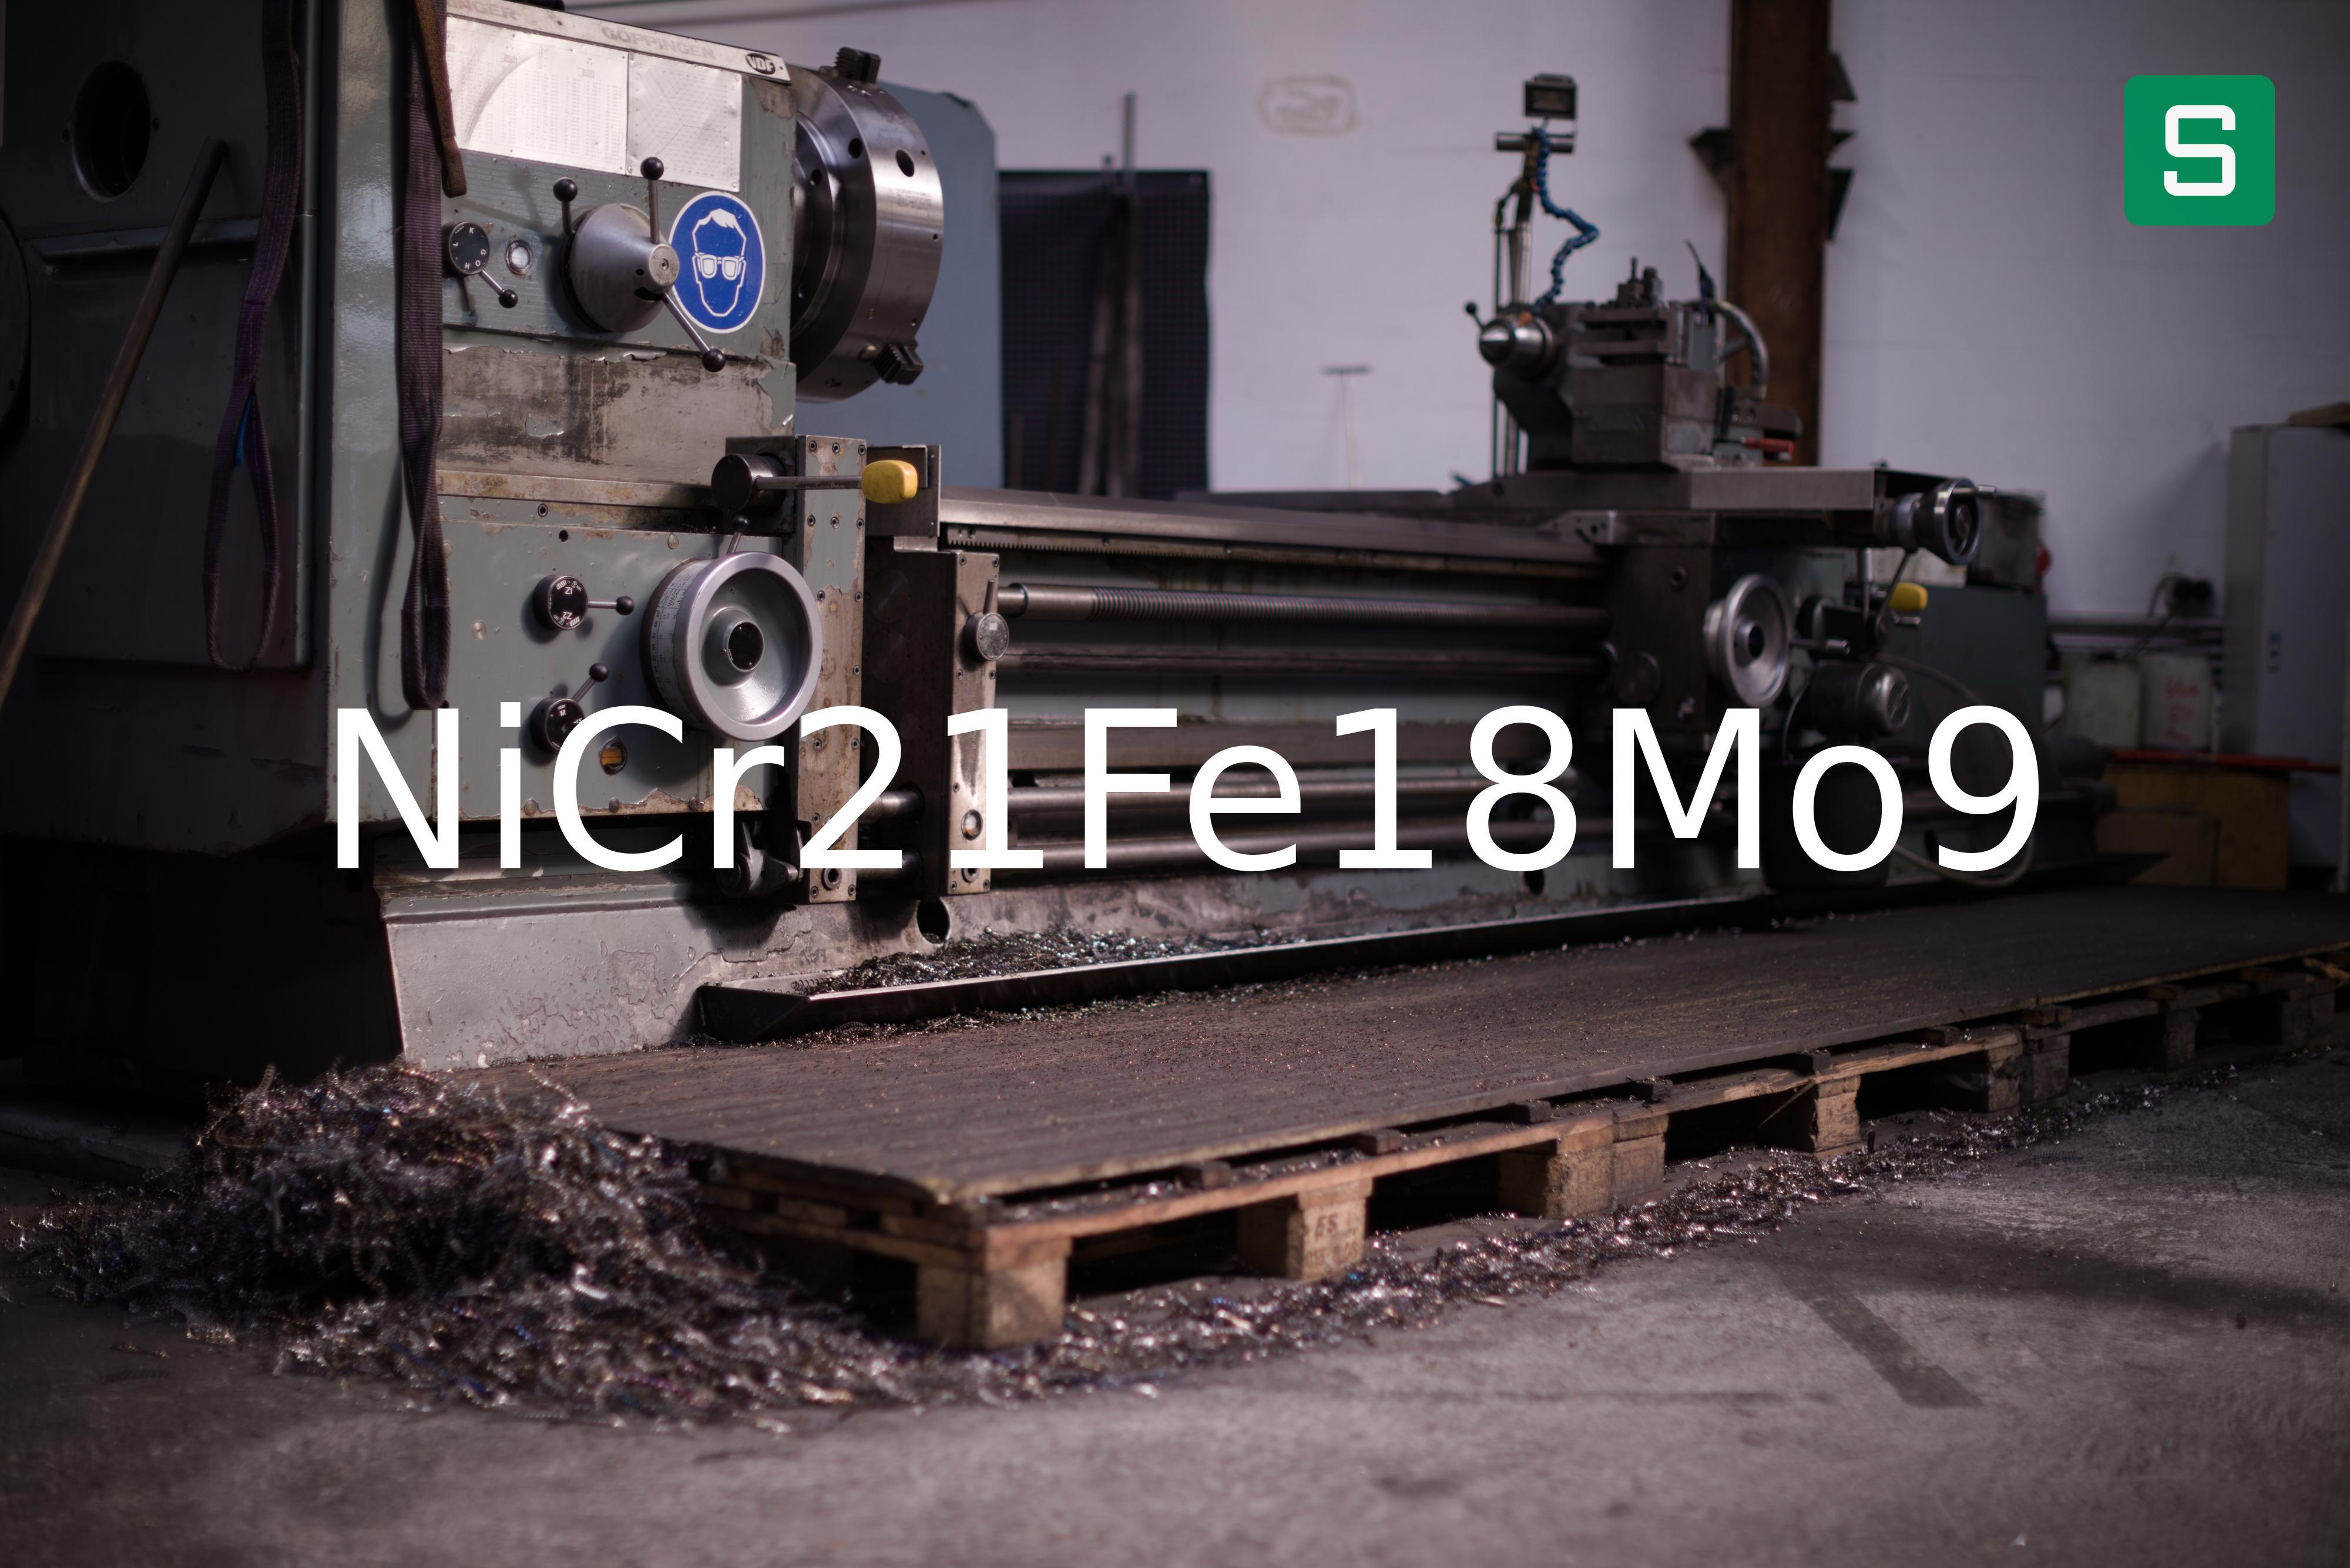 Stahlwerkstoff: NiCr21Fe18Mo9